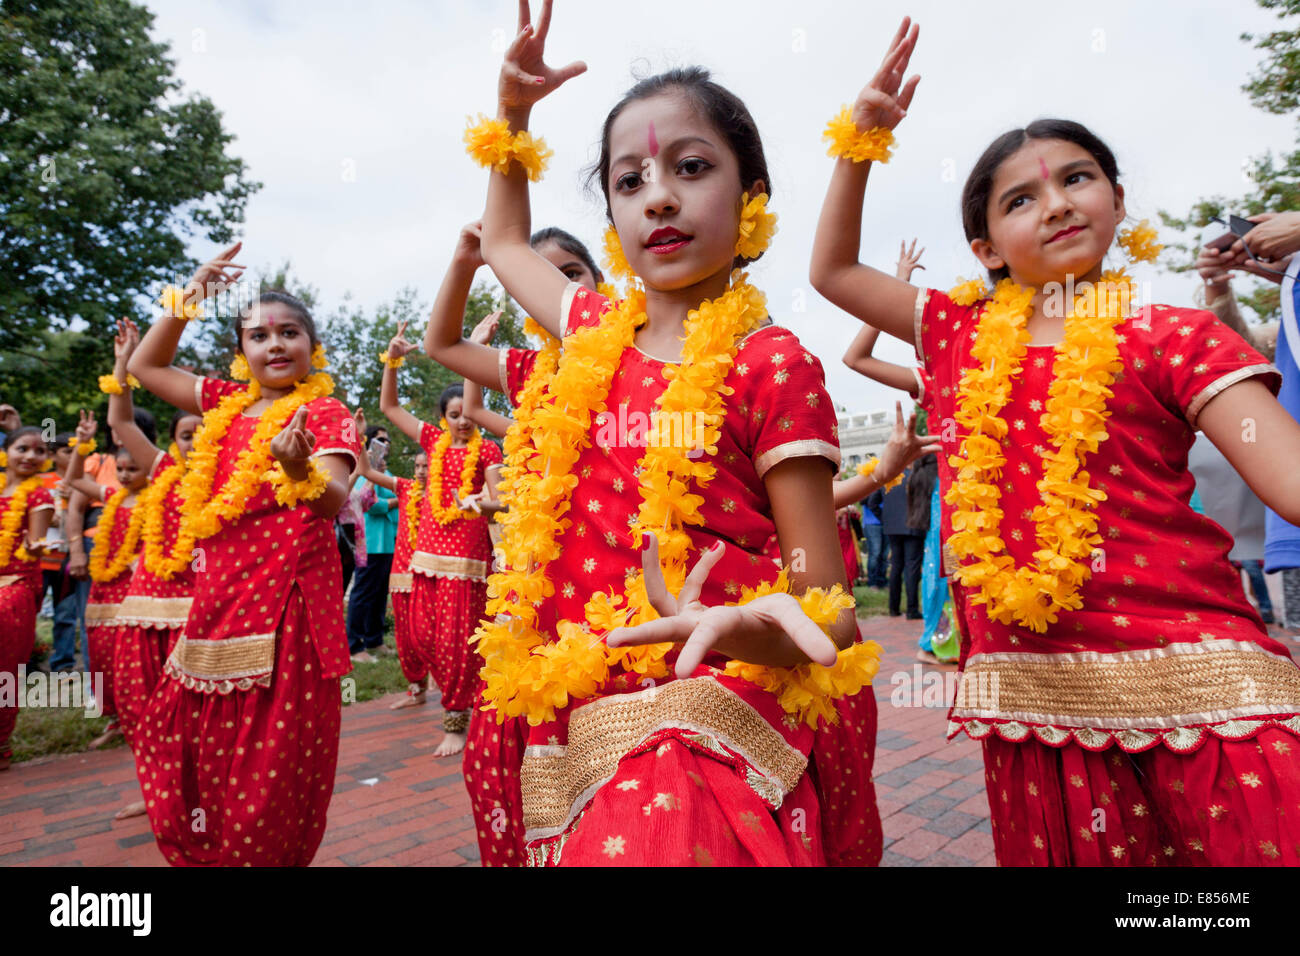 Musica classica indiana Odissi performance di danza da ragazze alla manifestazione culturale - USA Foto Stock